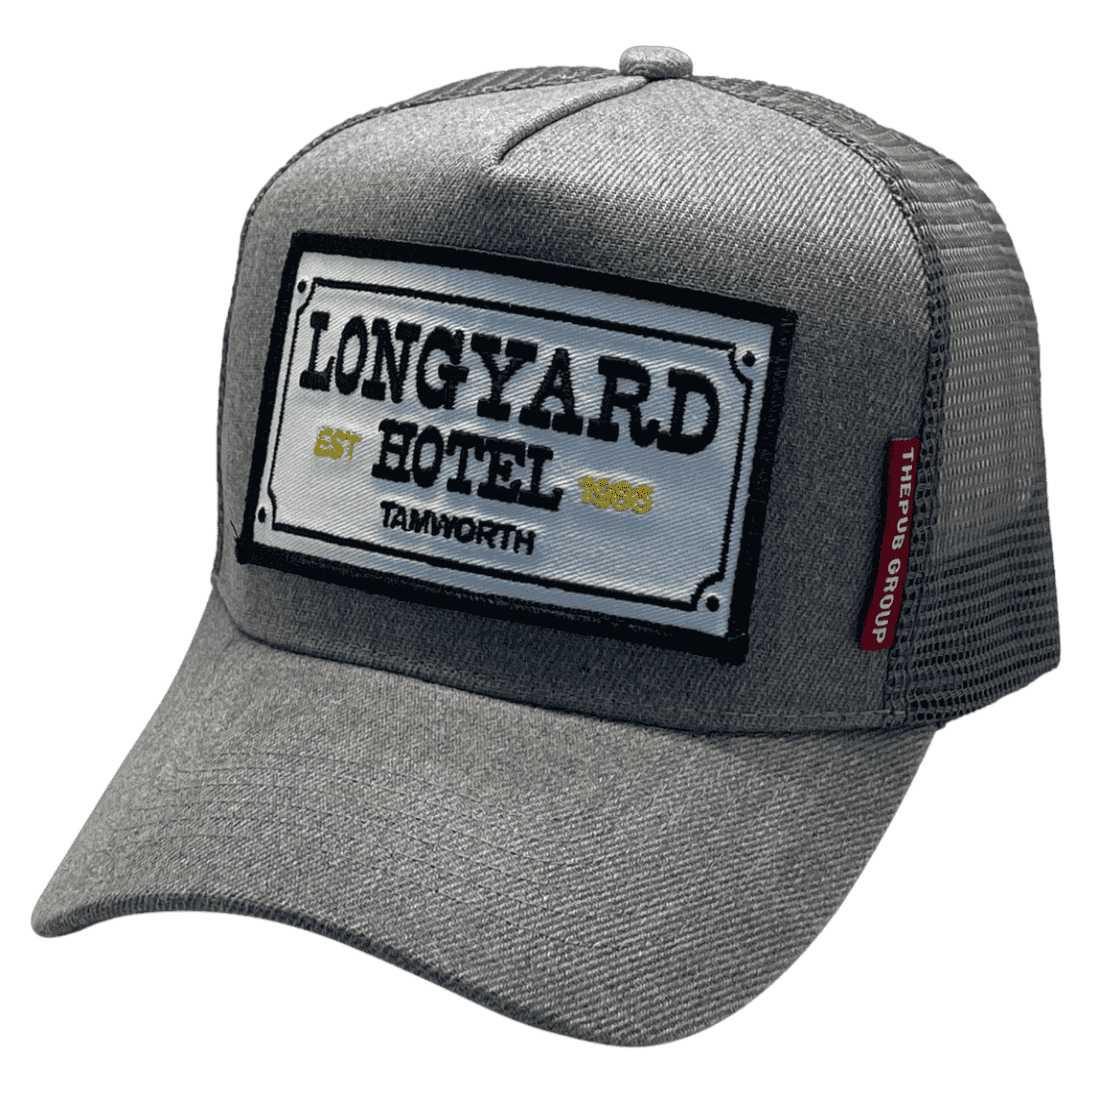 Longyard Hotel Tamworth Basic Aussie Trucker Hat Grey Fleck